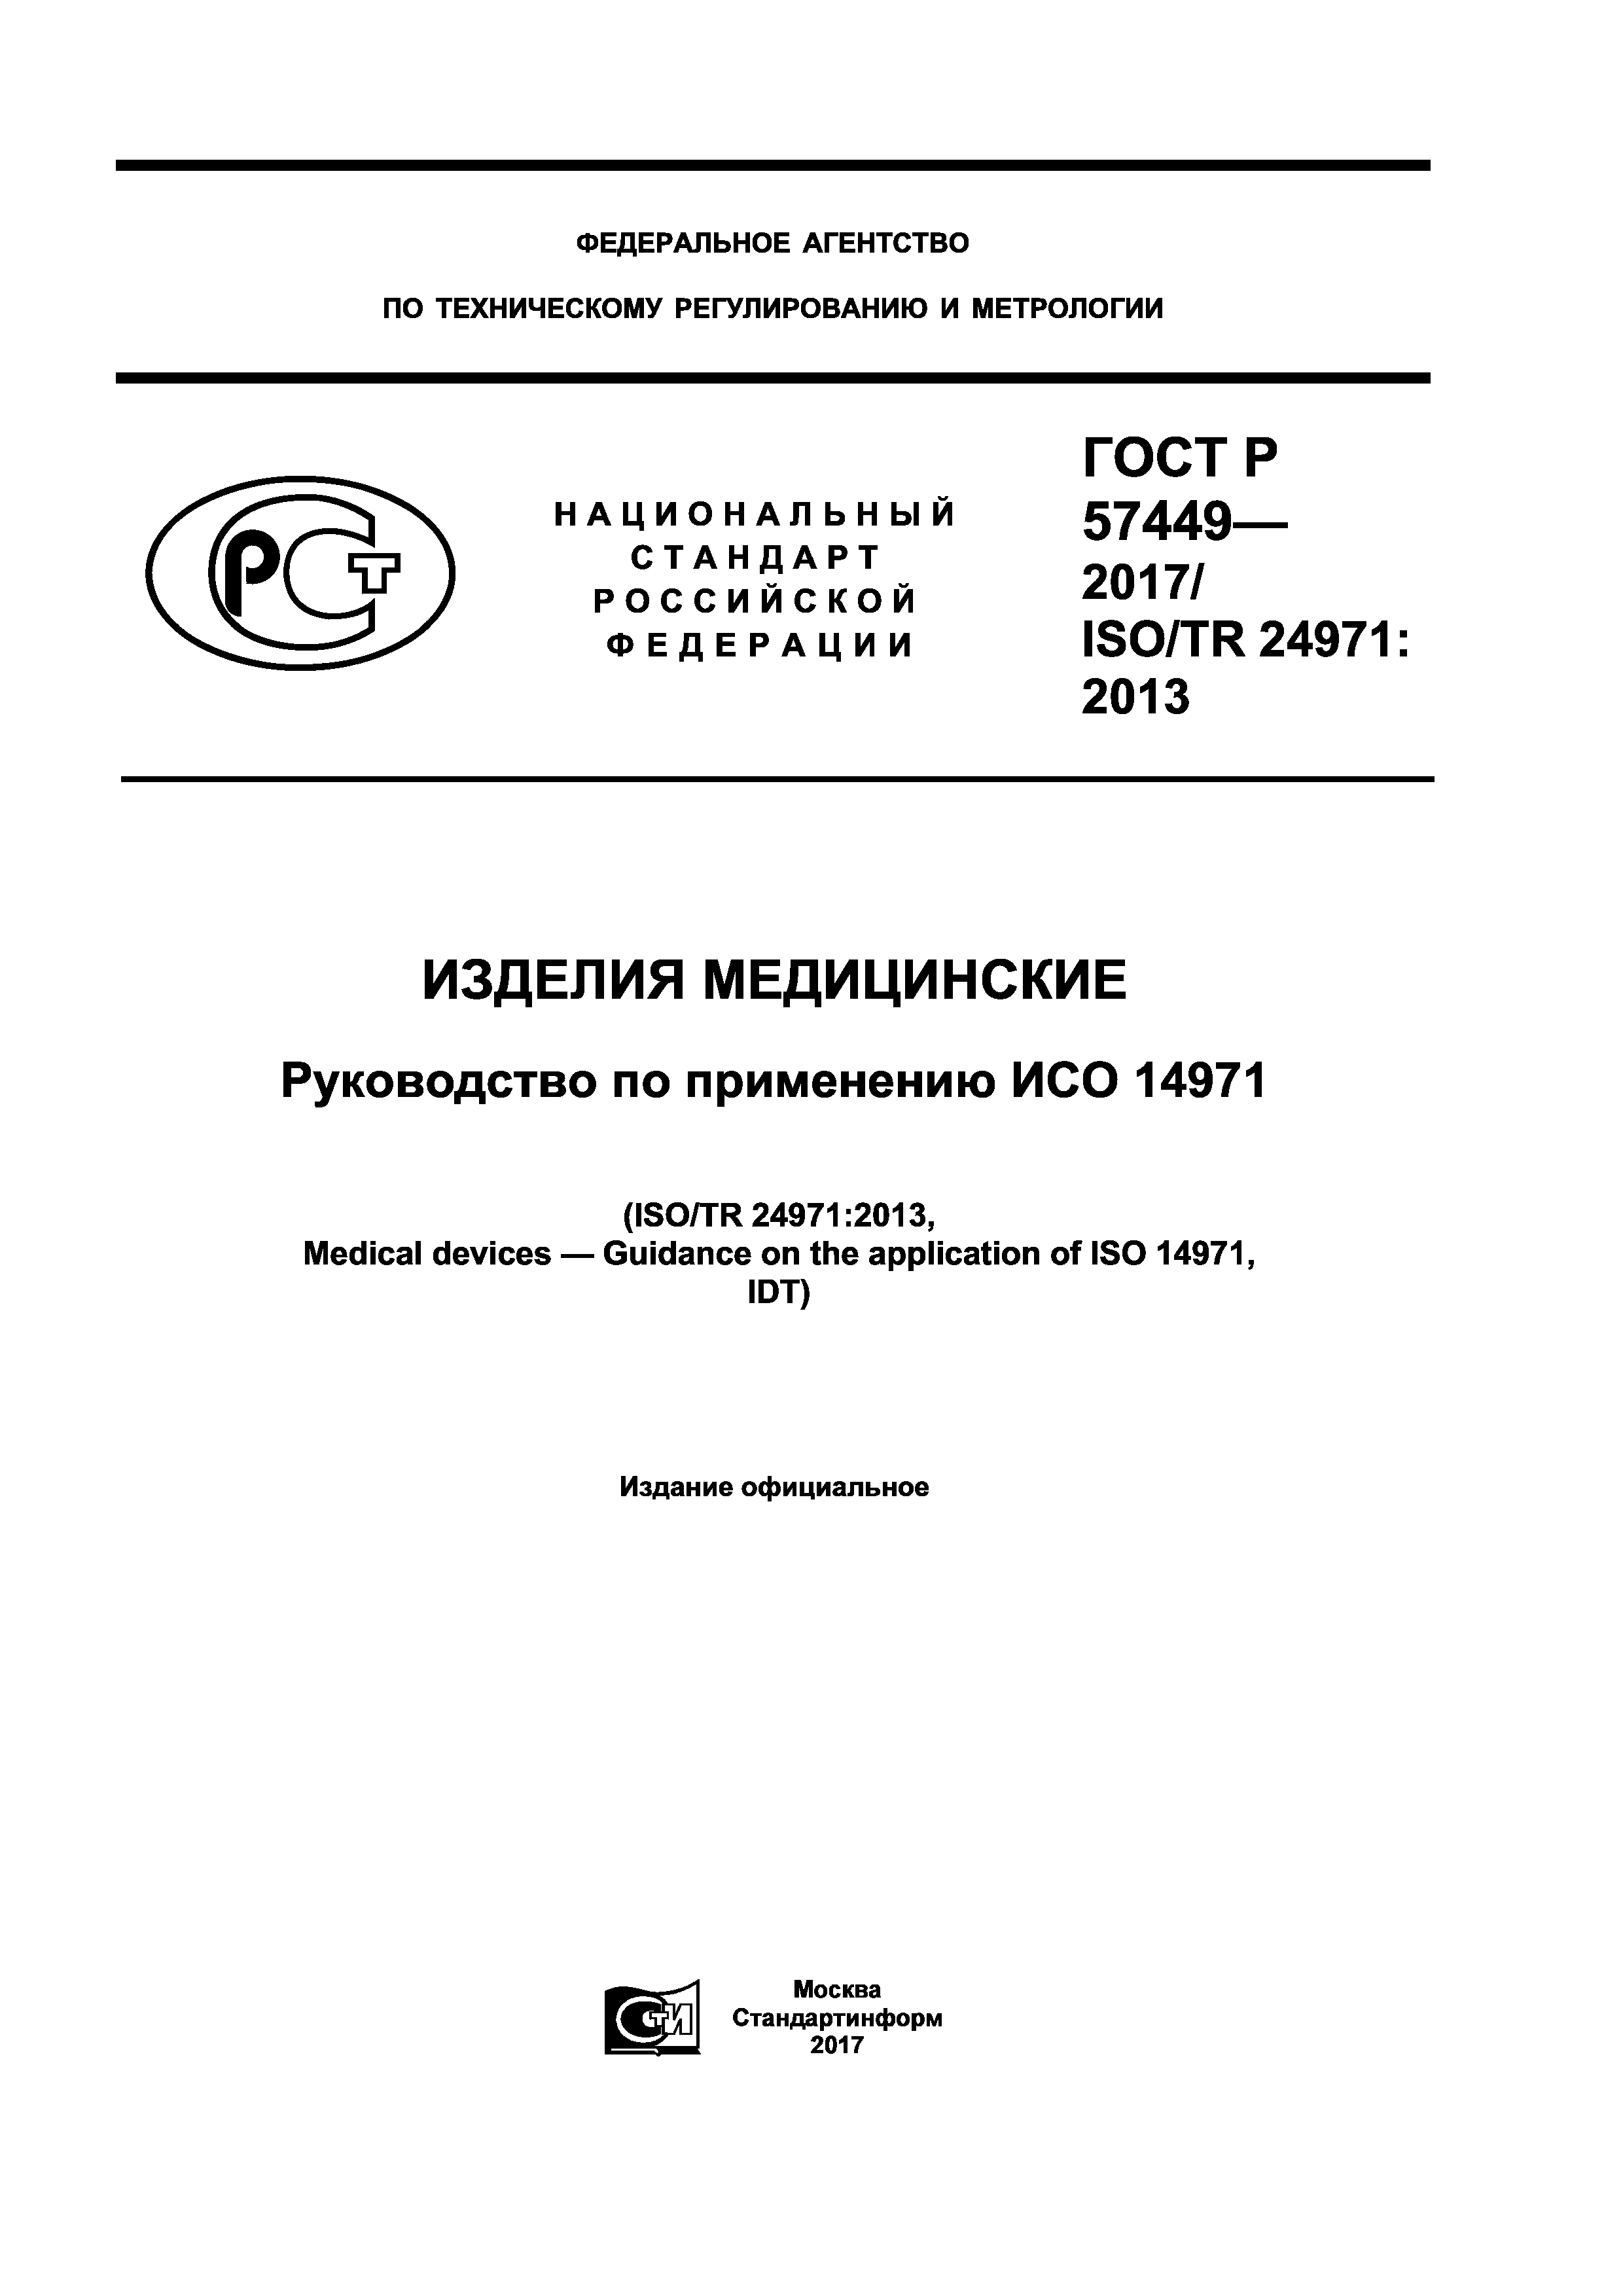 ГОСТ Р 57449-2017